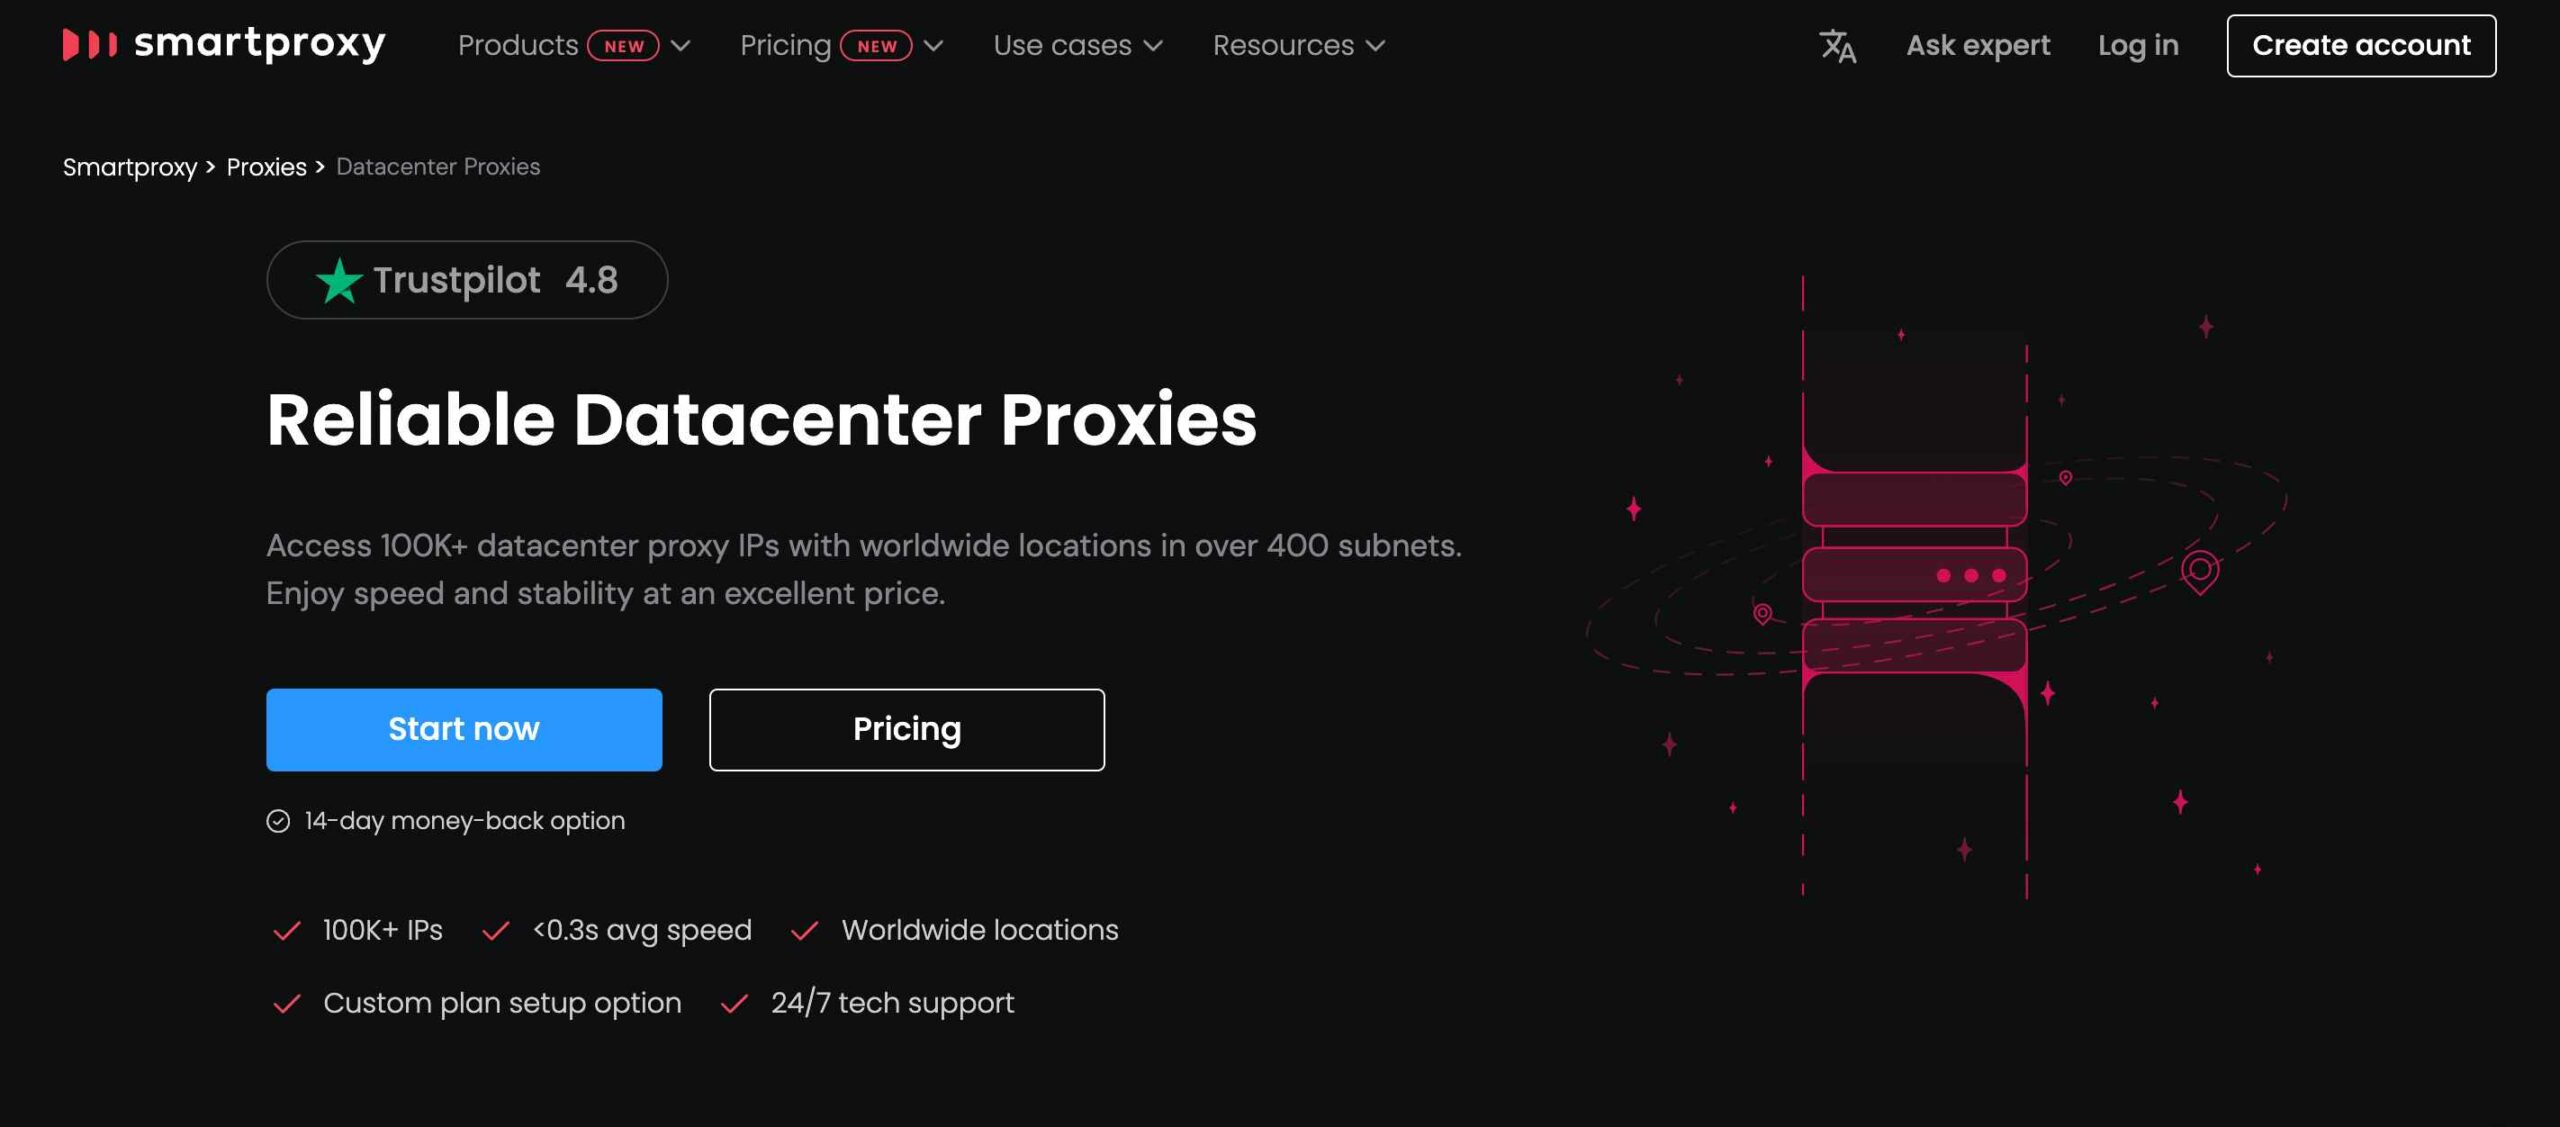 Smartproxy Datacenter Proxies